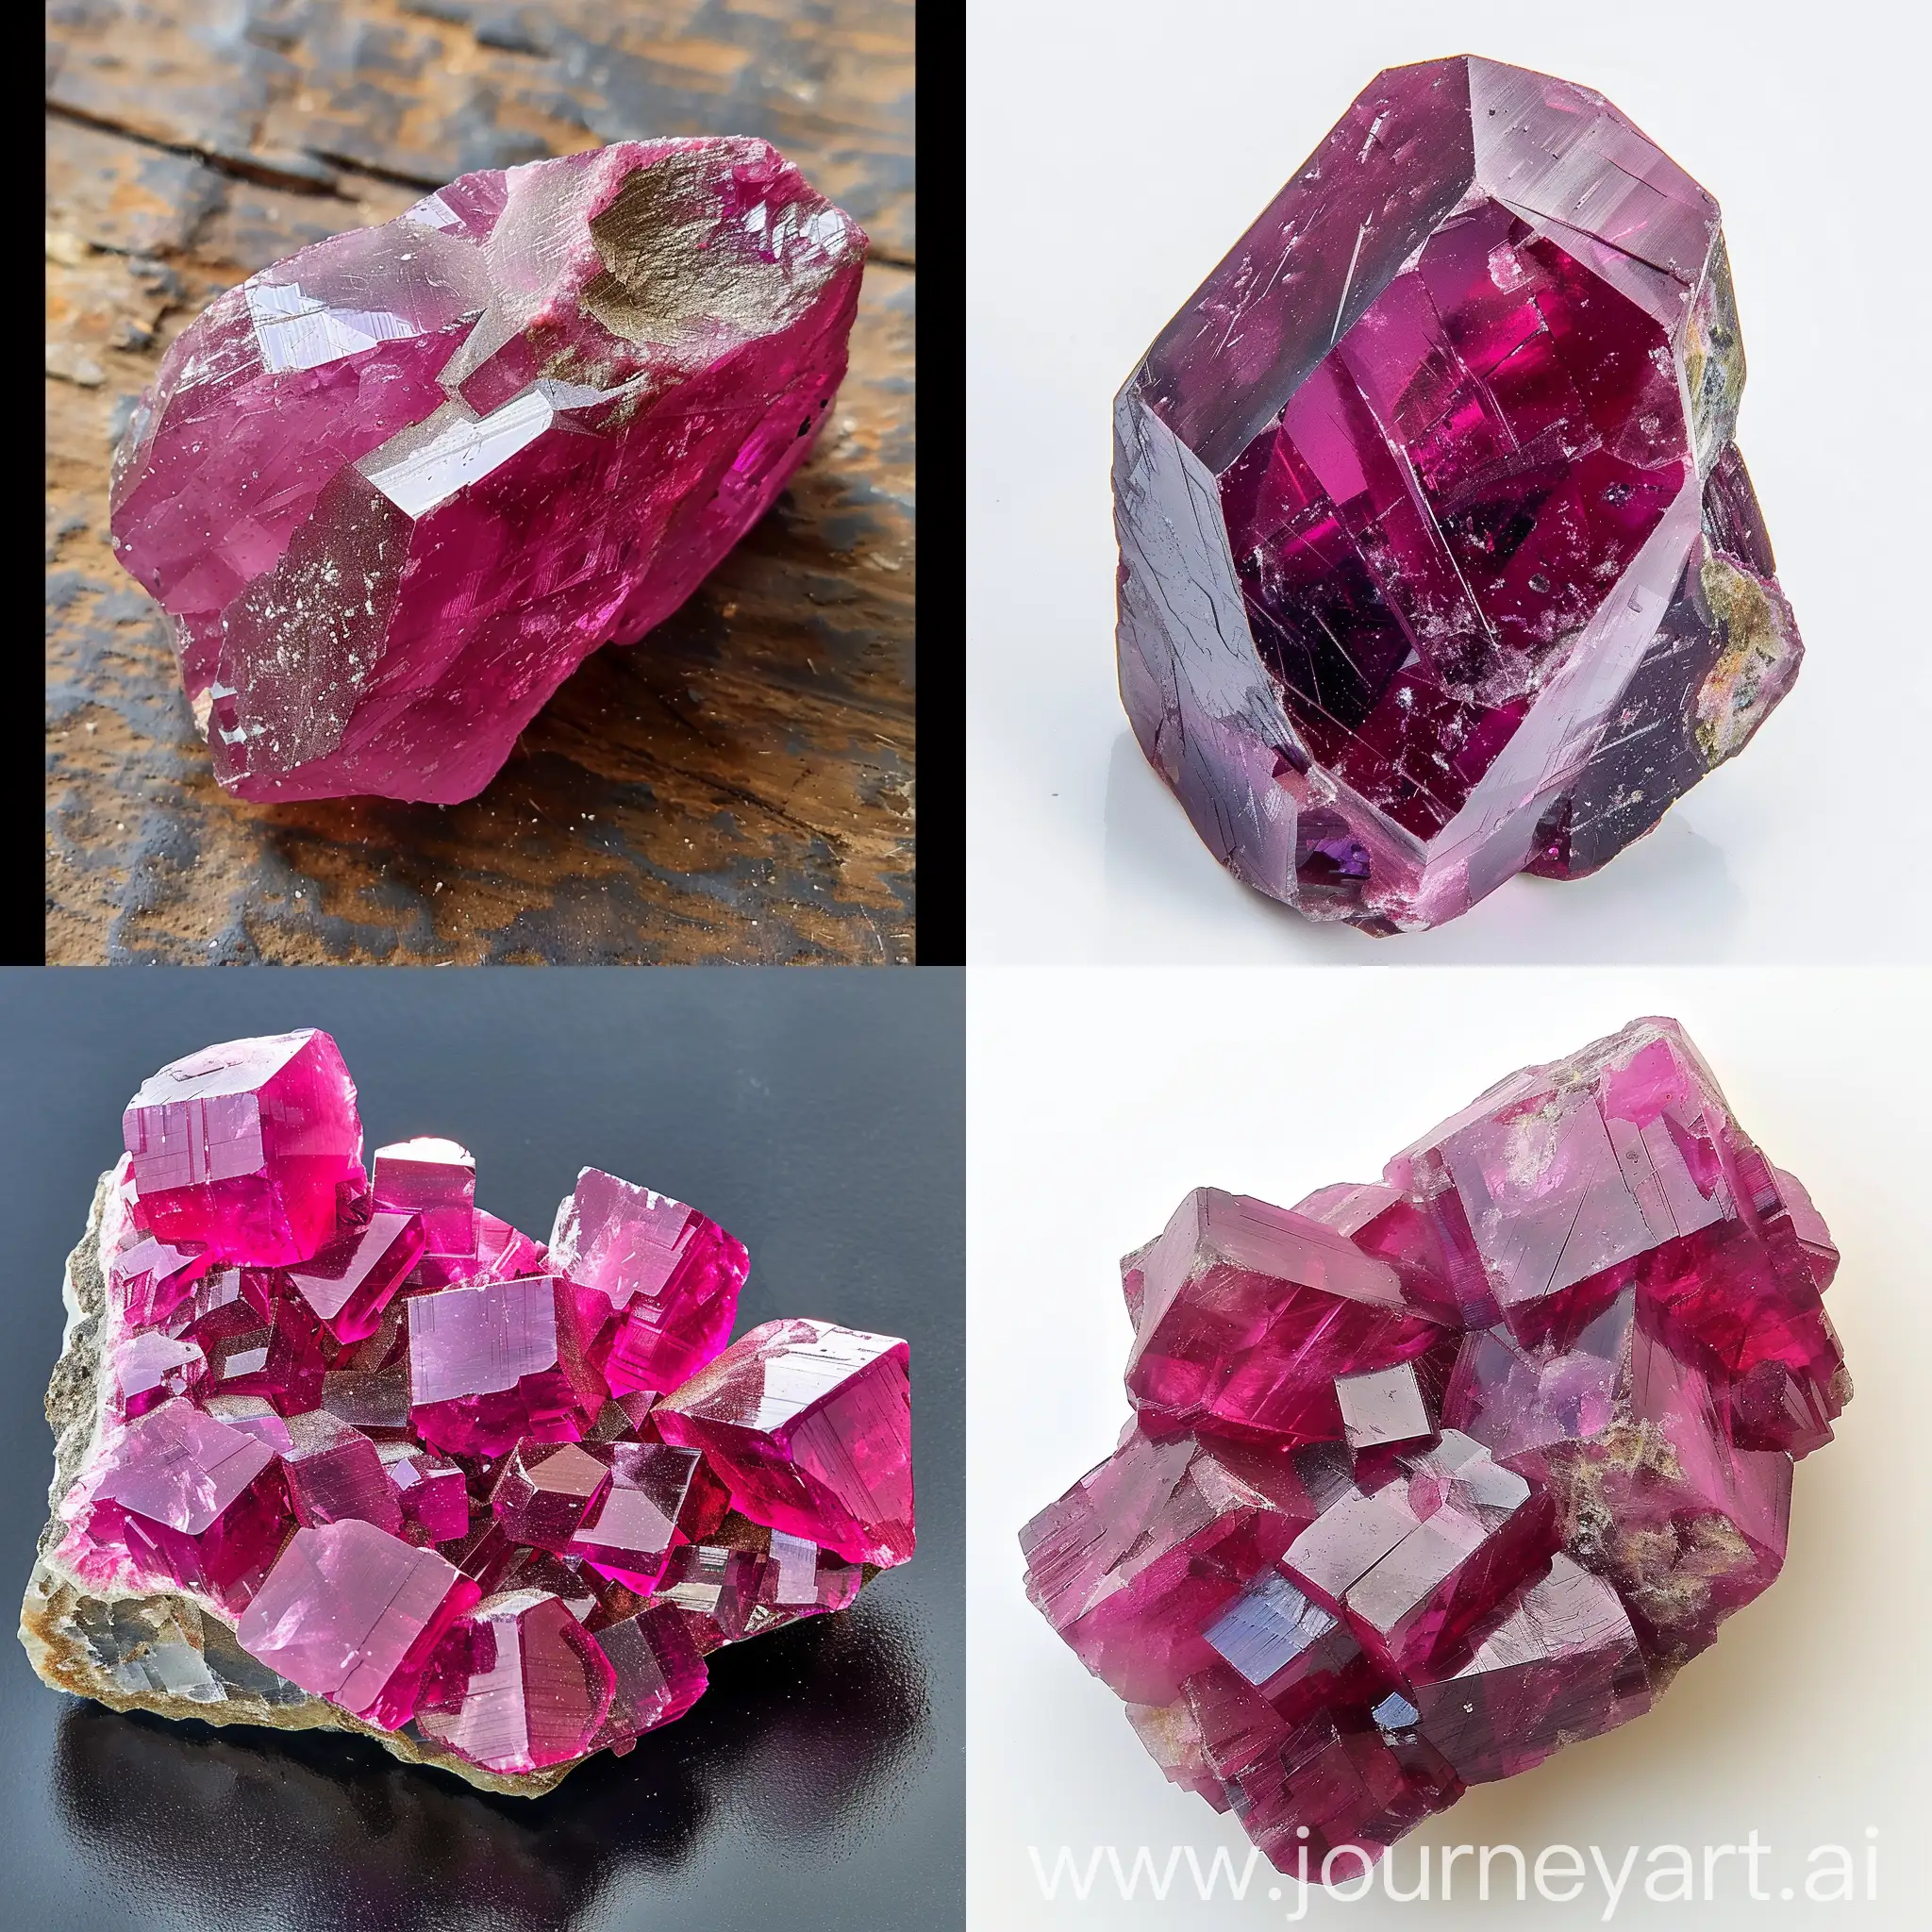 Stunning-Ruby-Crystal-in-Vivid-Display